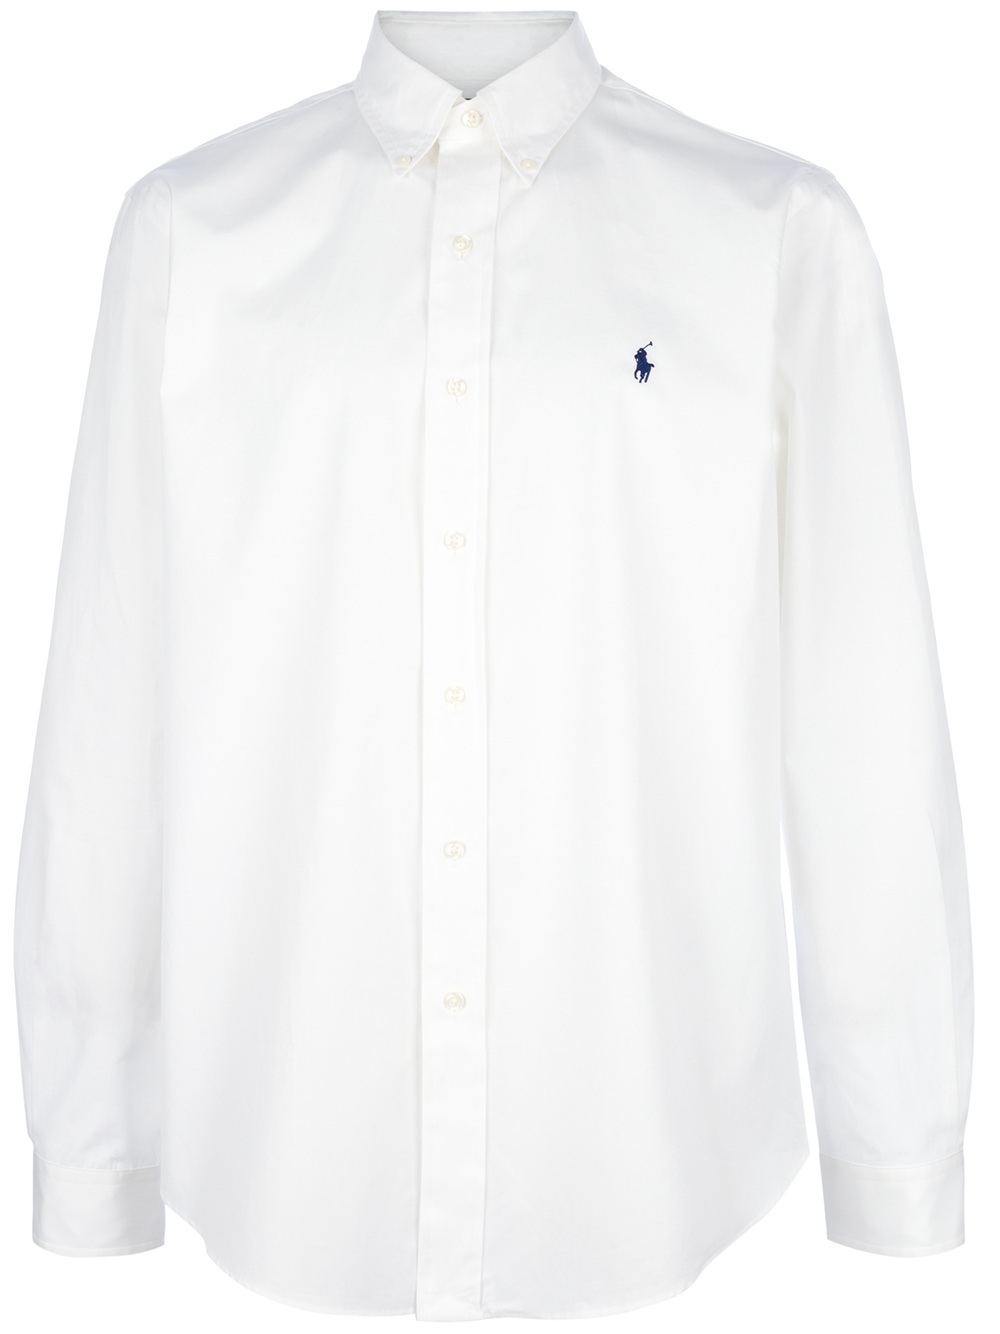 Lyst - Polo Ralph Lauren Branded Button Down Shirt in White for Men